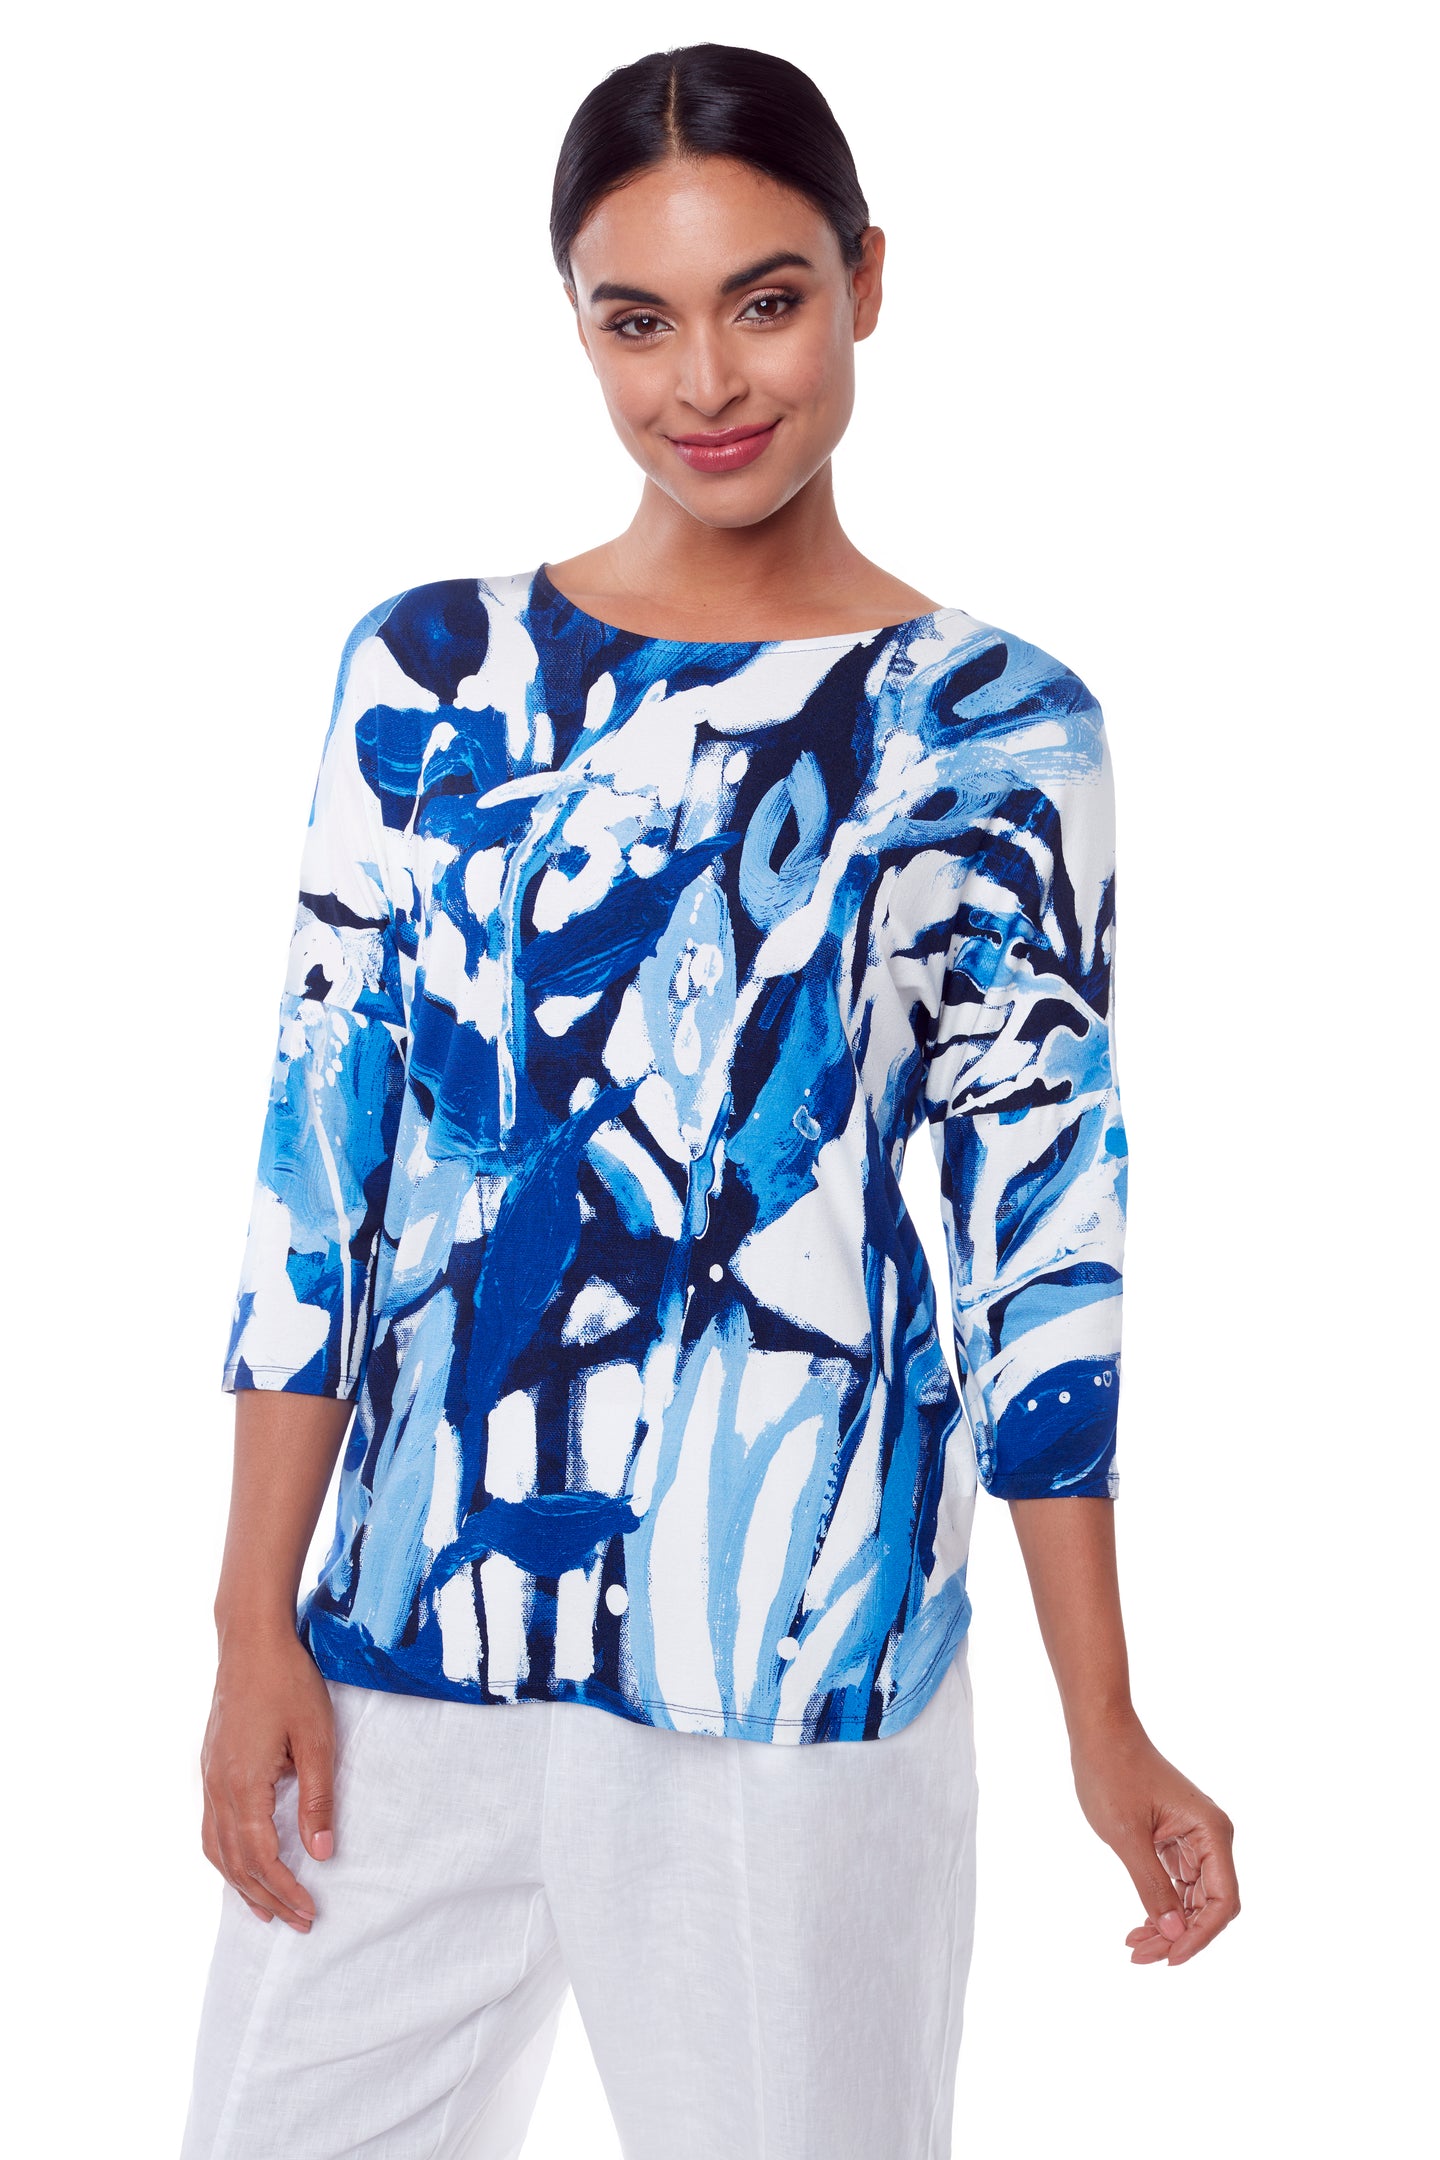 Blue & White: At Lib 3/4-length dolman sleeve top